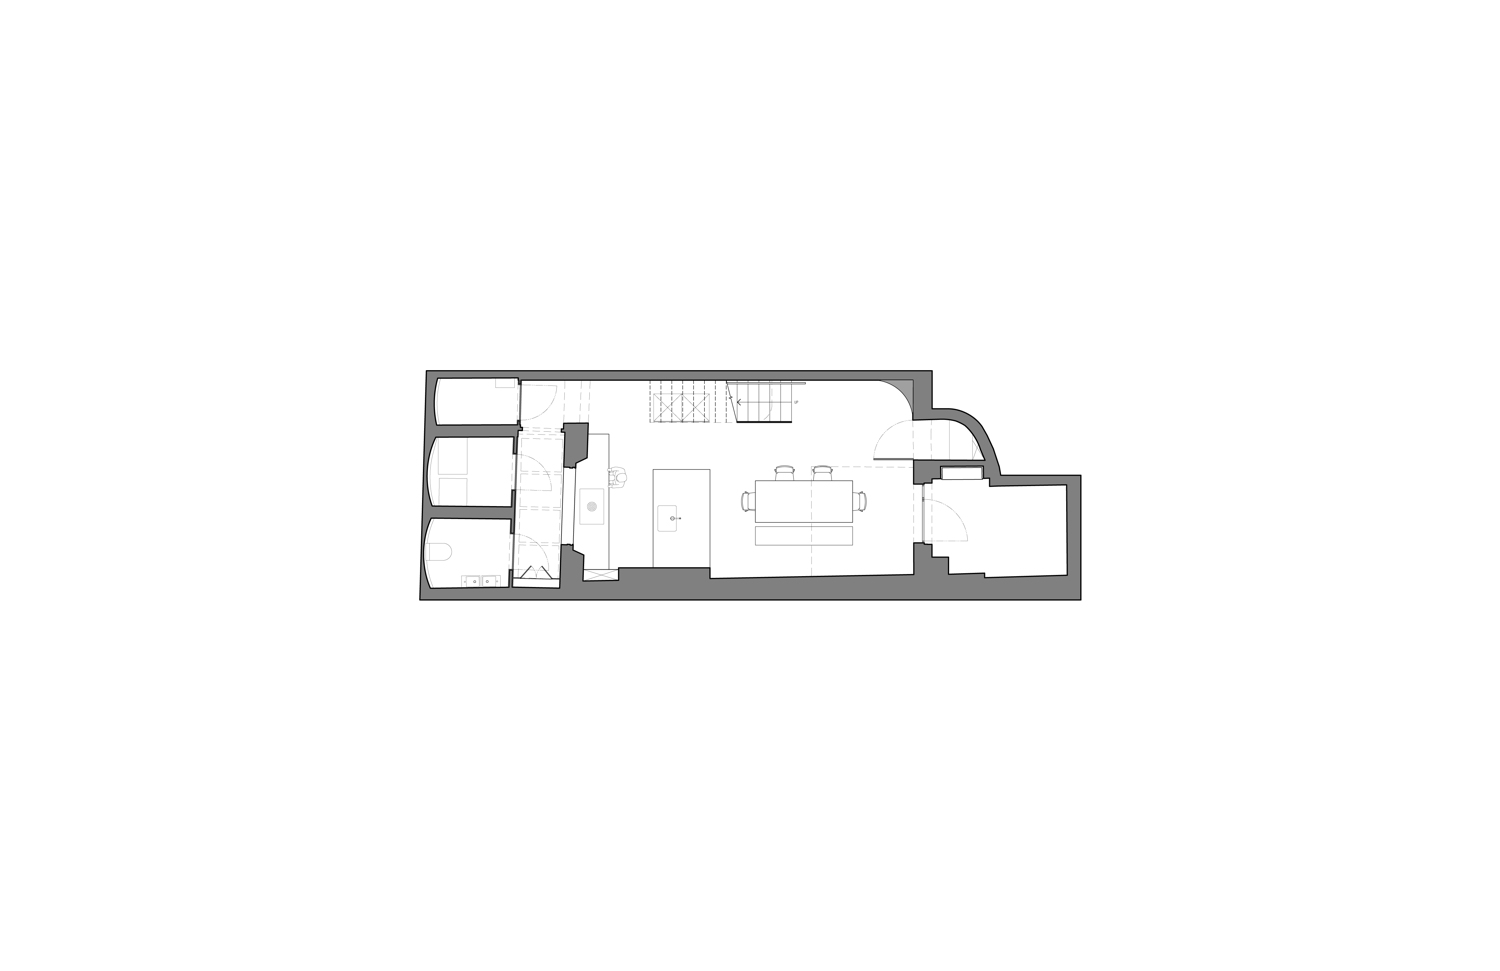 Basement floor plan, courtesy of Architensions